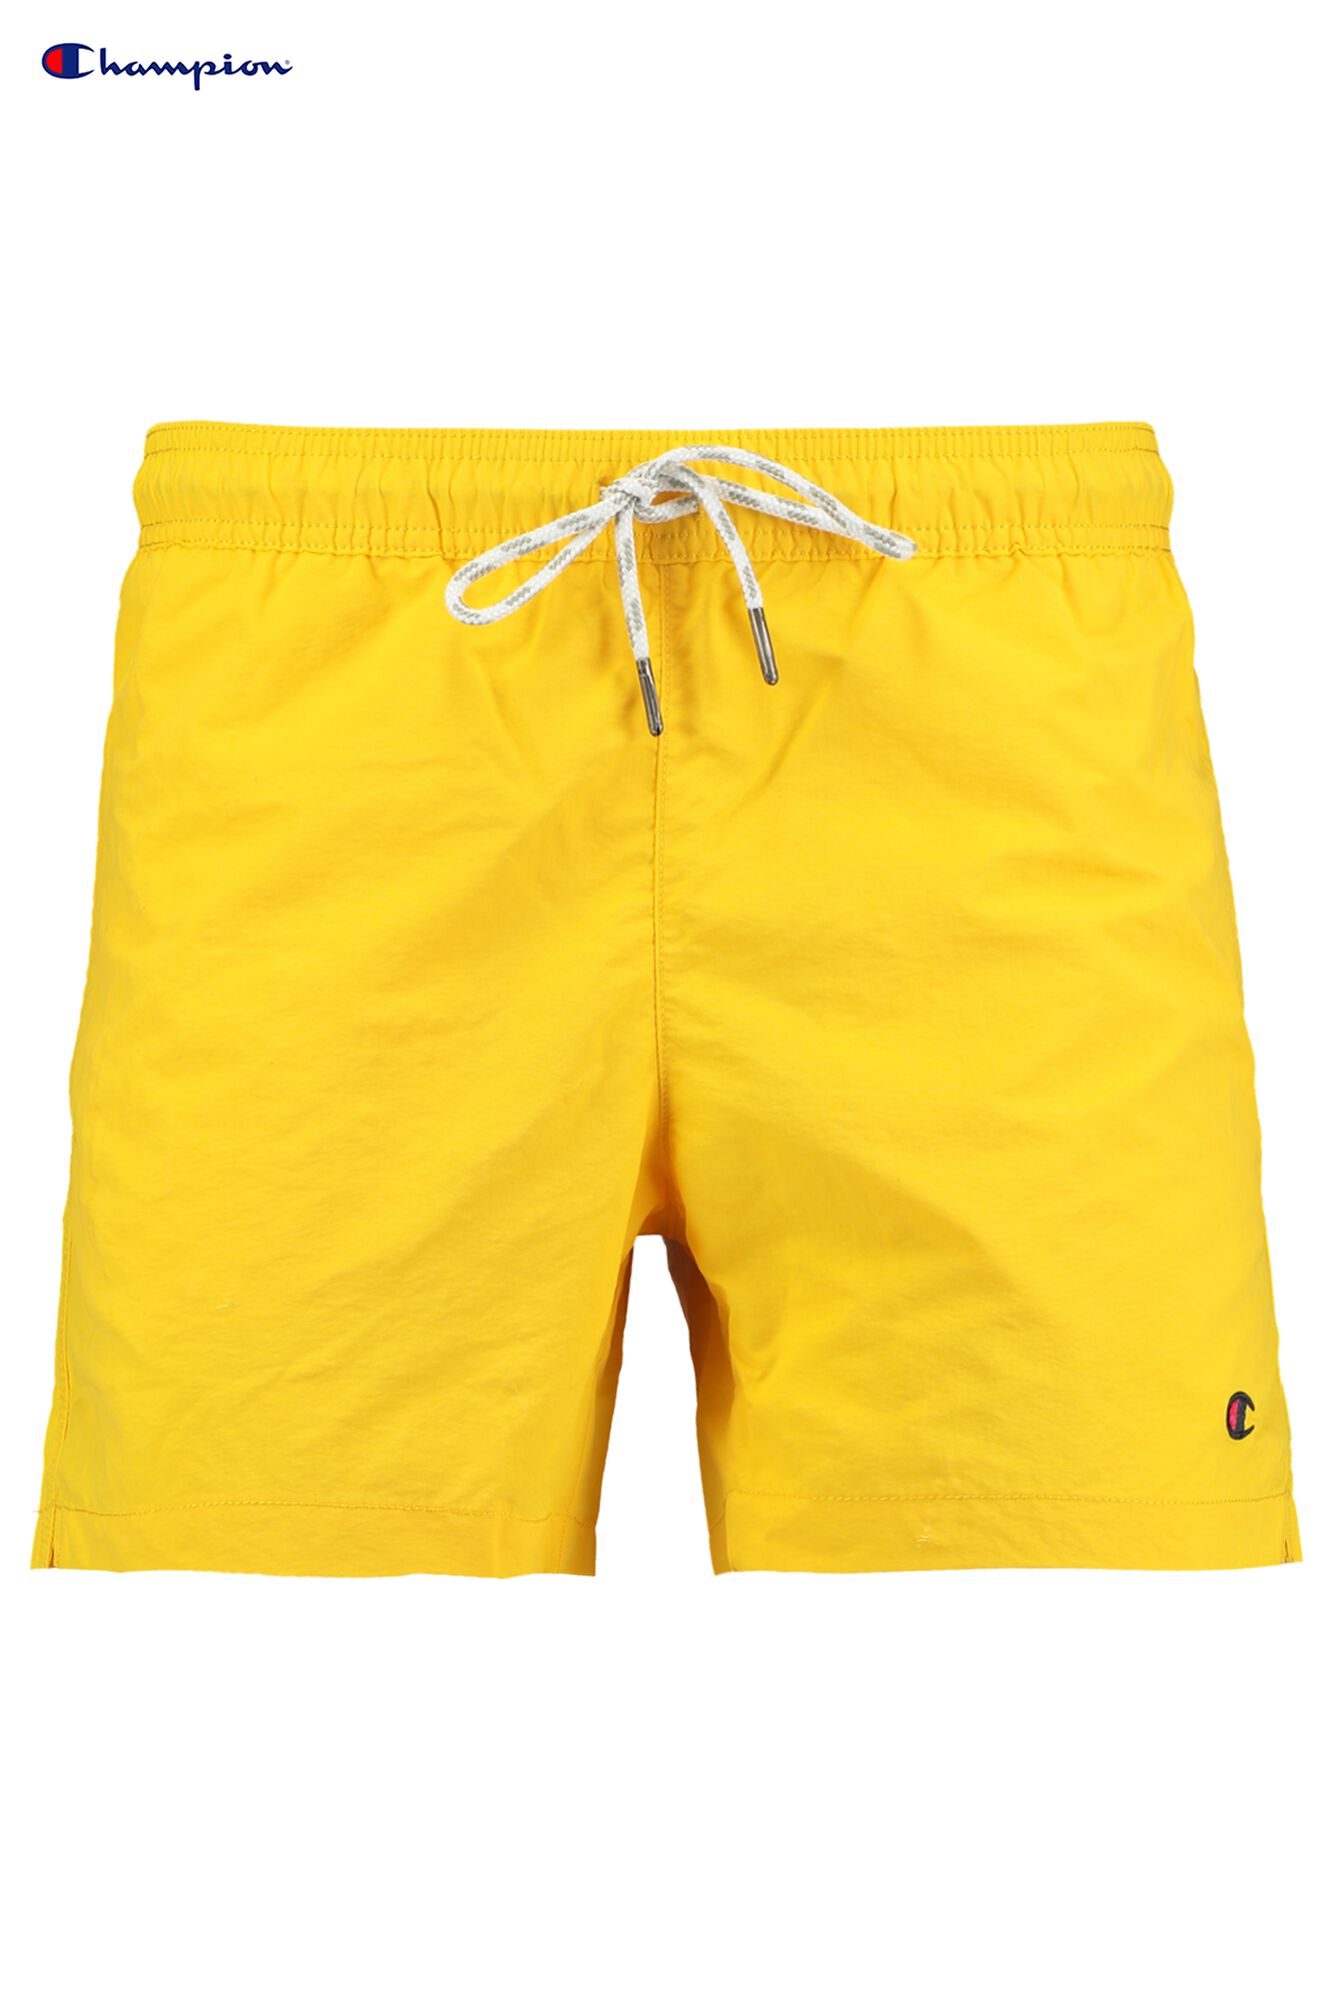 Men Swimming trunks Champion Beach short Yellow Buy Online